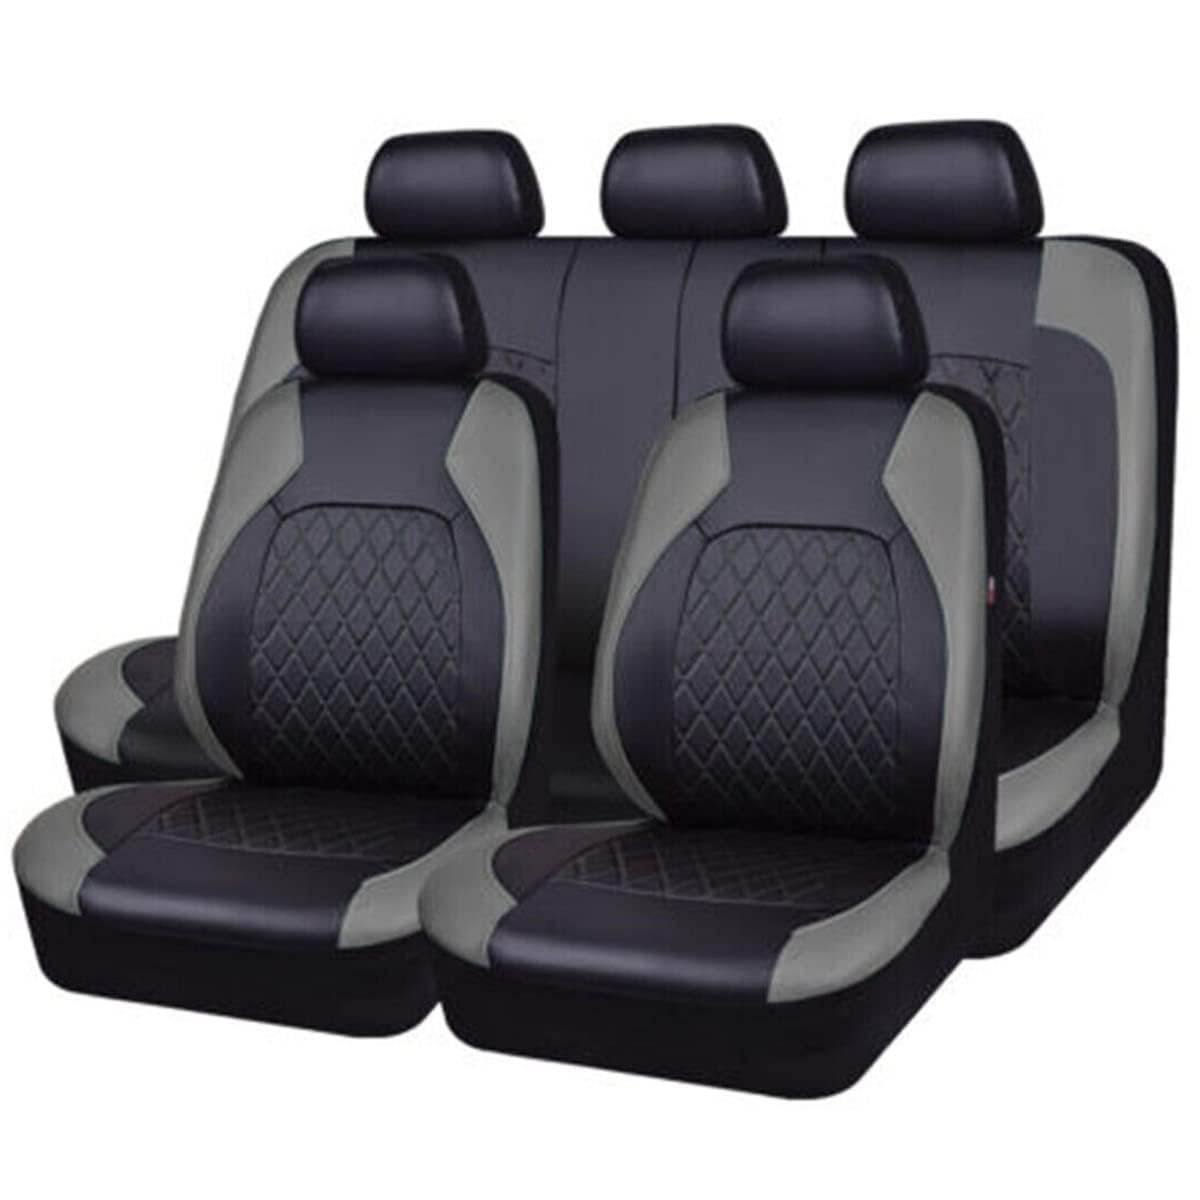 CAALO Auto Leder Sitzschoner Set für Toyota Prius+ 2013-2017,Auto Schonbezug Full Set Leder Sitzbezug Vordersitze Rücksitzschoner Auto Zubehör,A-Gray von CAALO